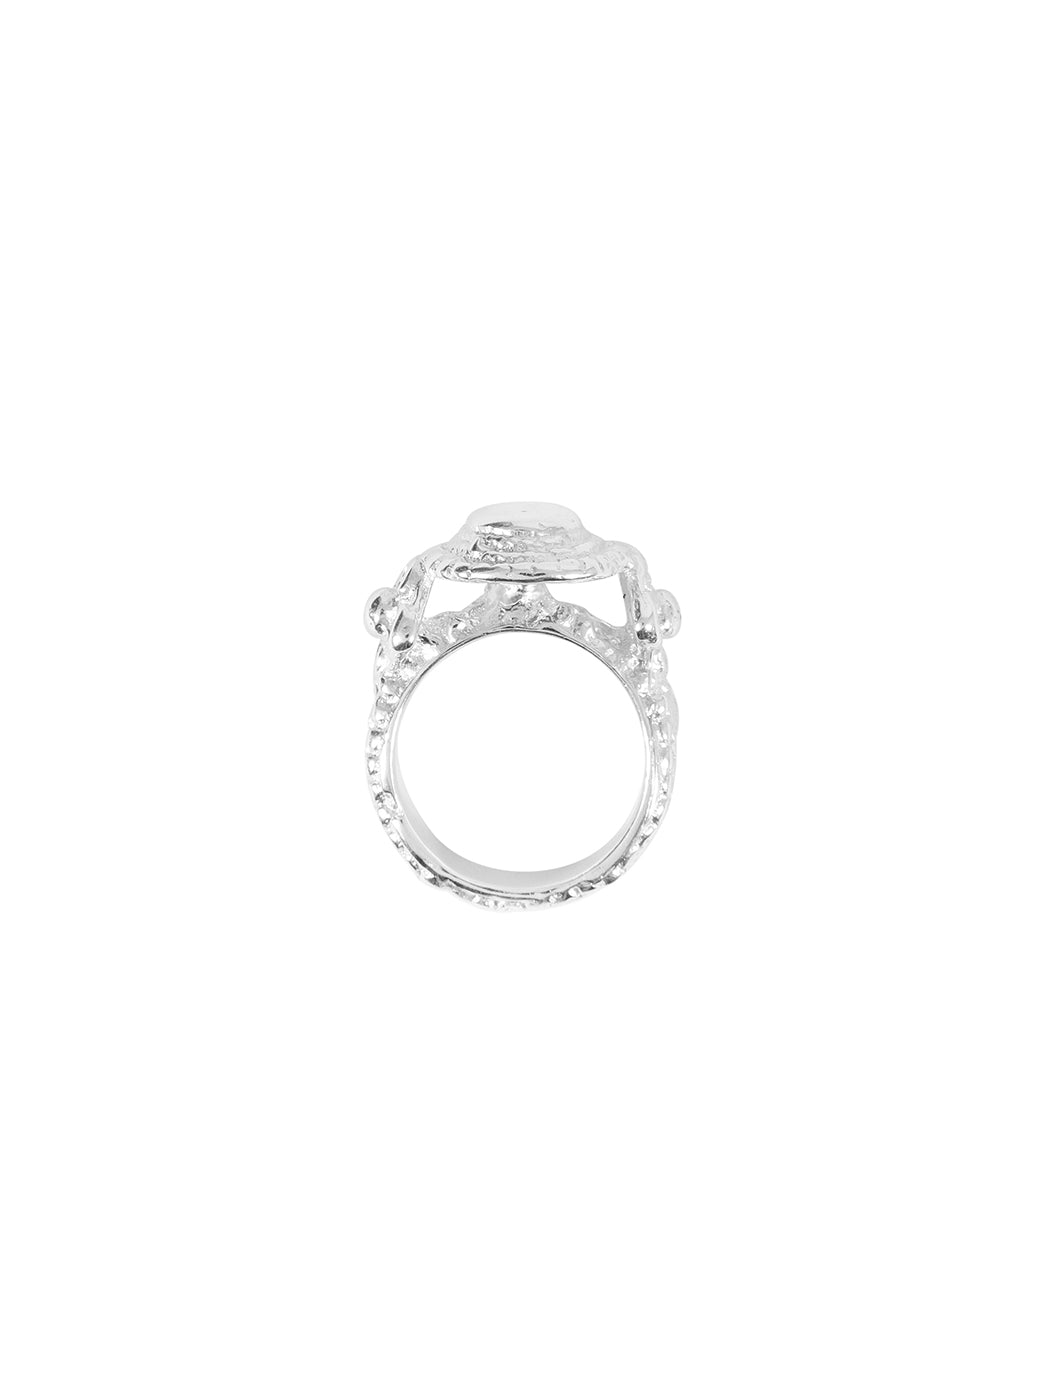 Fiorina Jewellery Rachel's Ring Side View